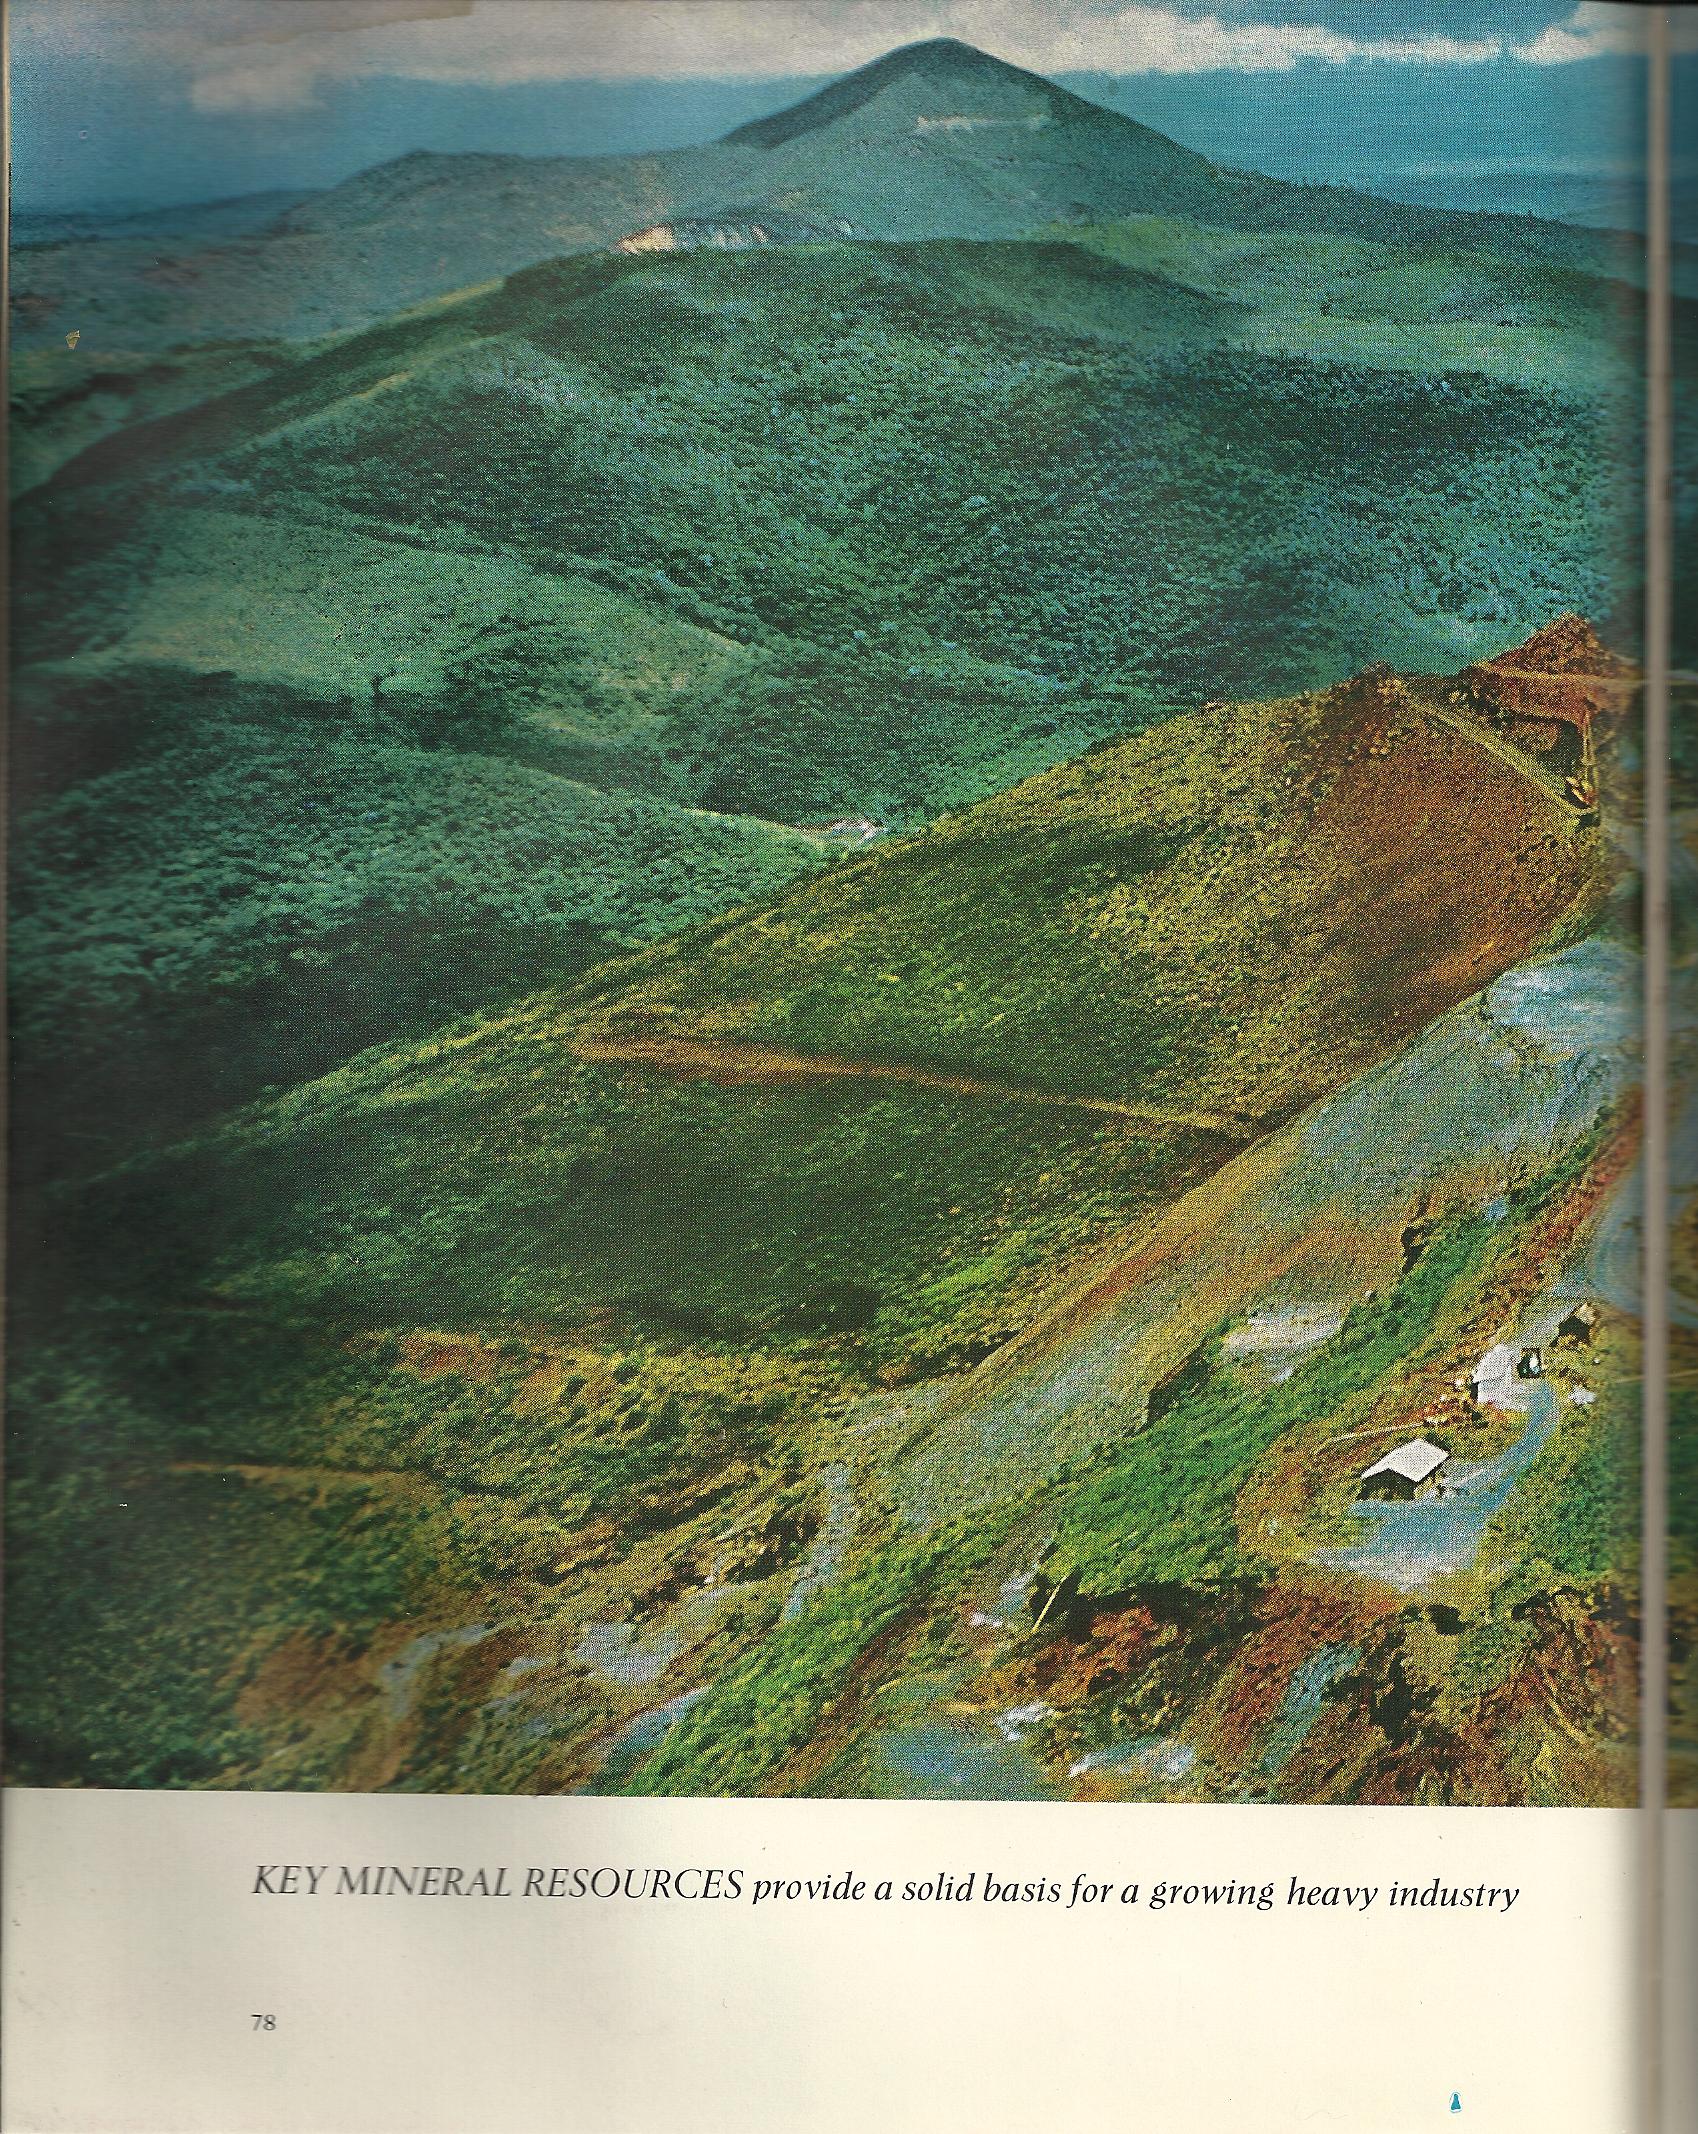 Brazil Iron Ore Mine - 1962 - Time Life World Library - Atlas Obscura Blog